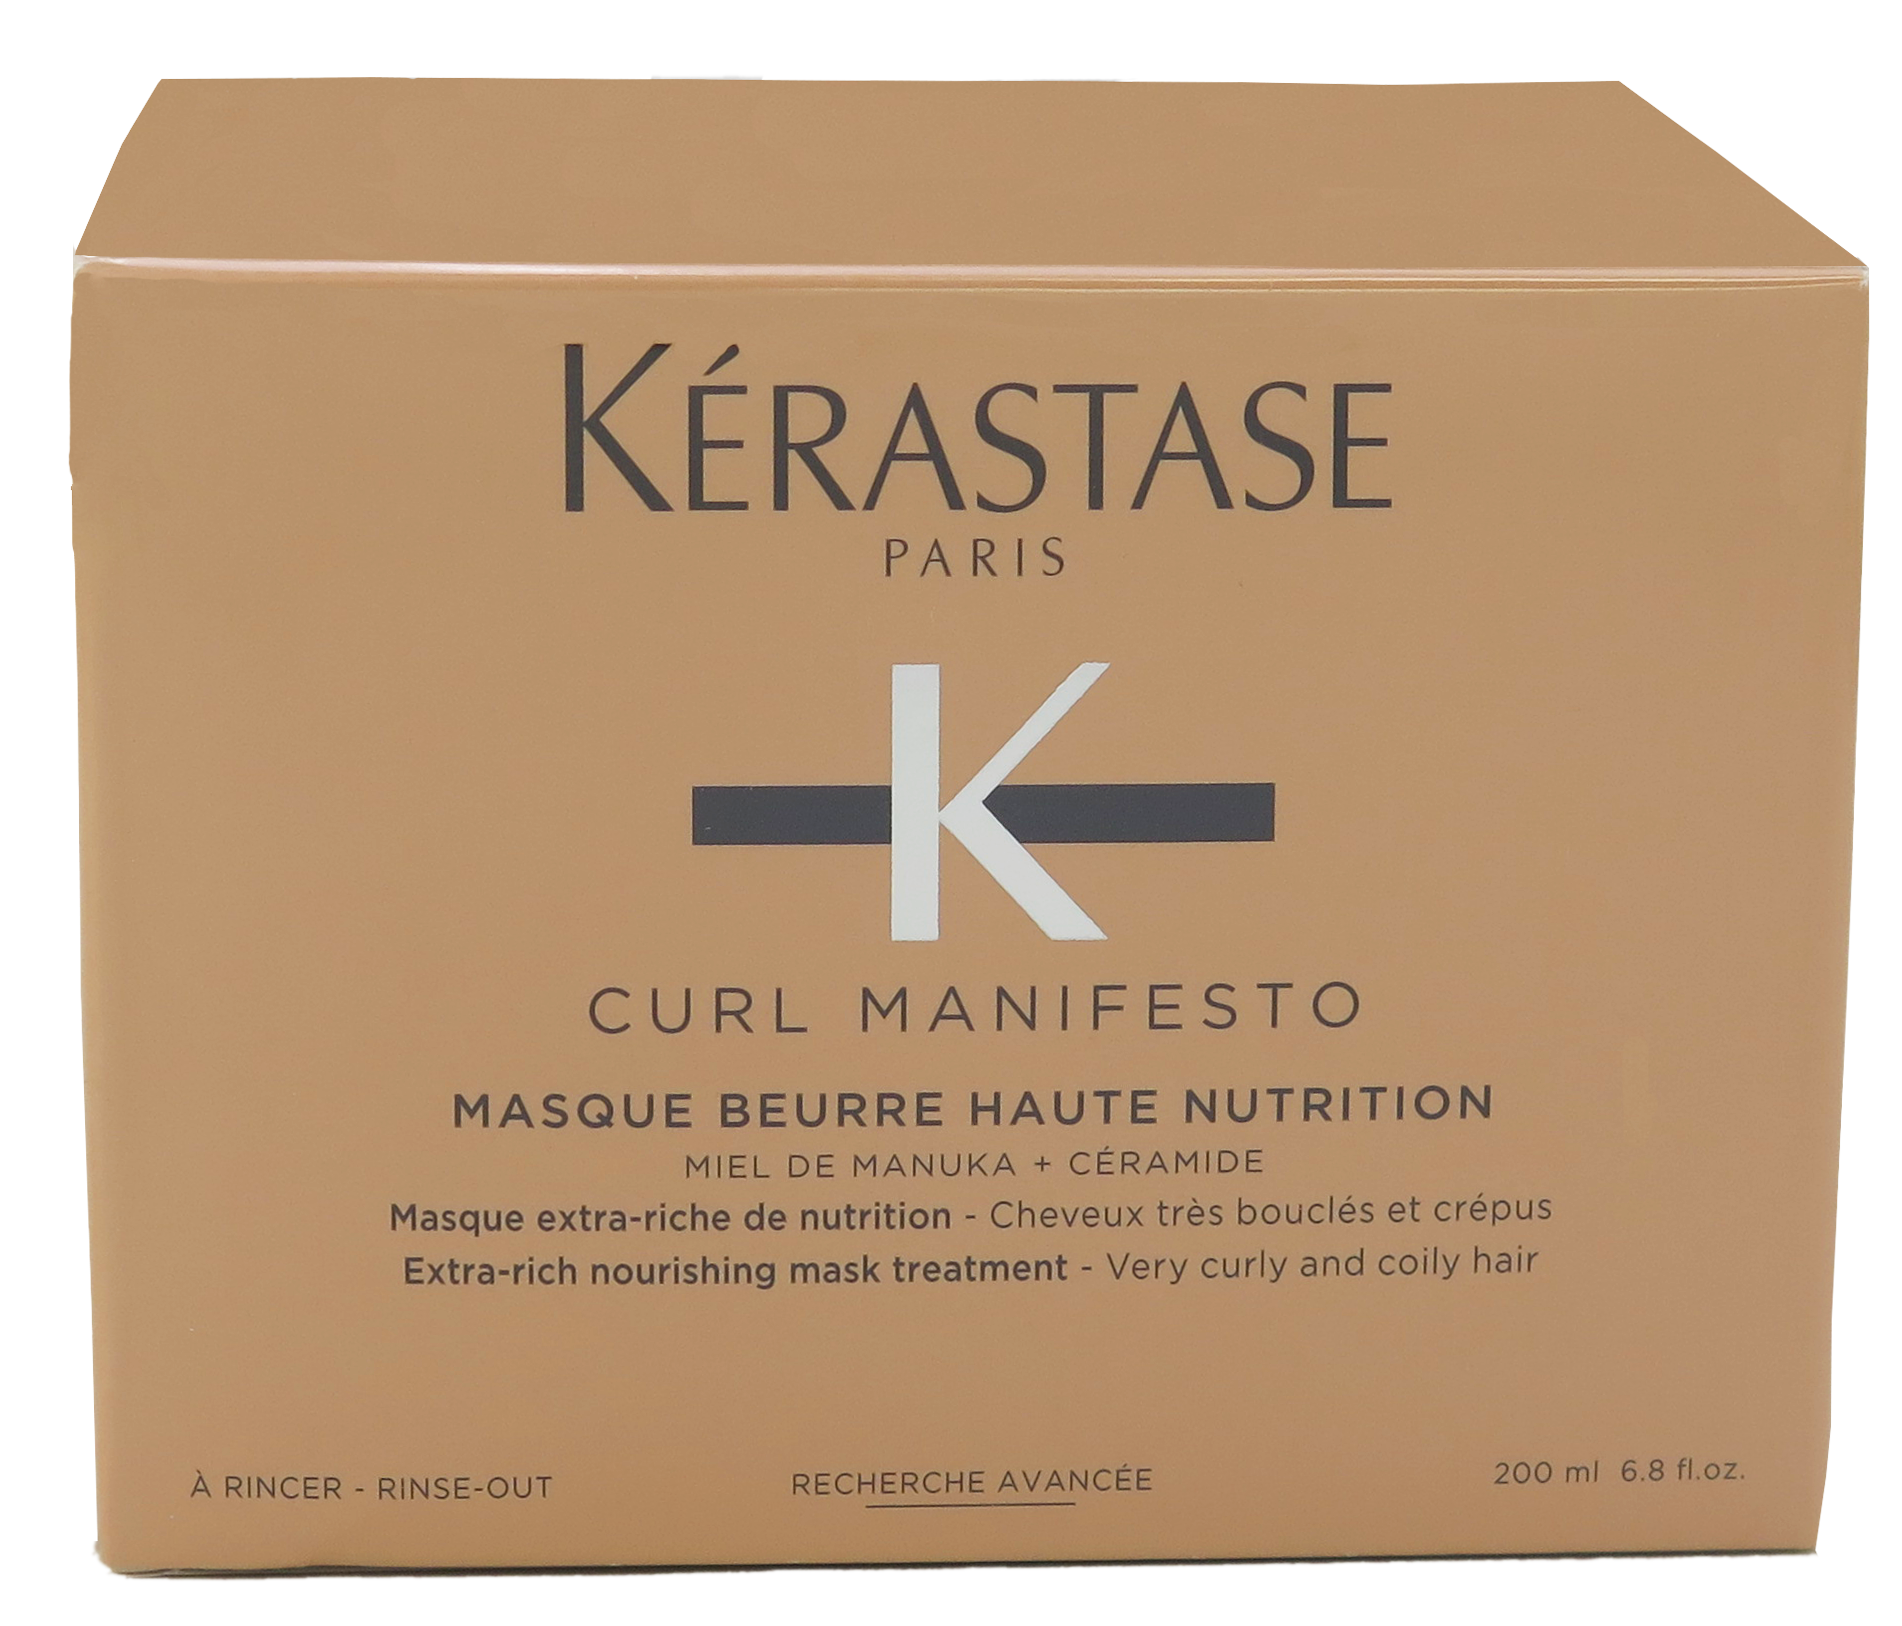 Kerastase Curl Manifesto Masque Beurre Haute Nutrition 6.8 fl oz